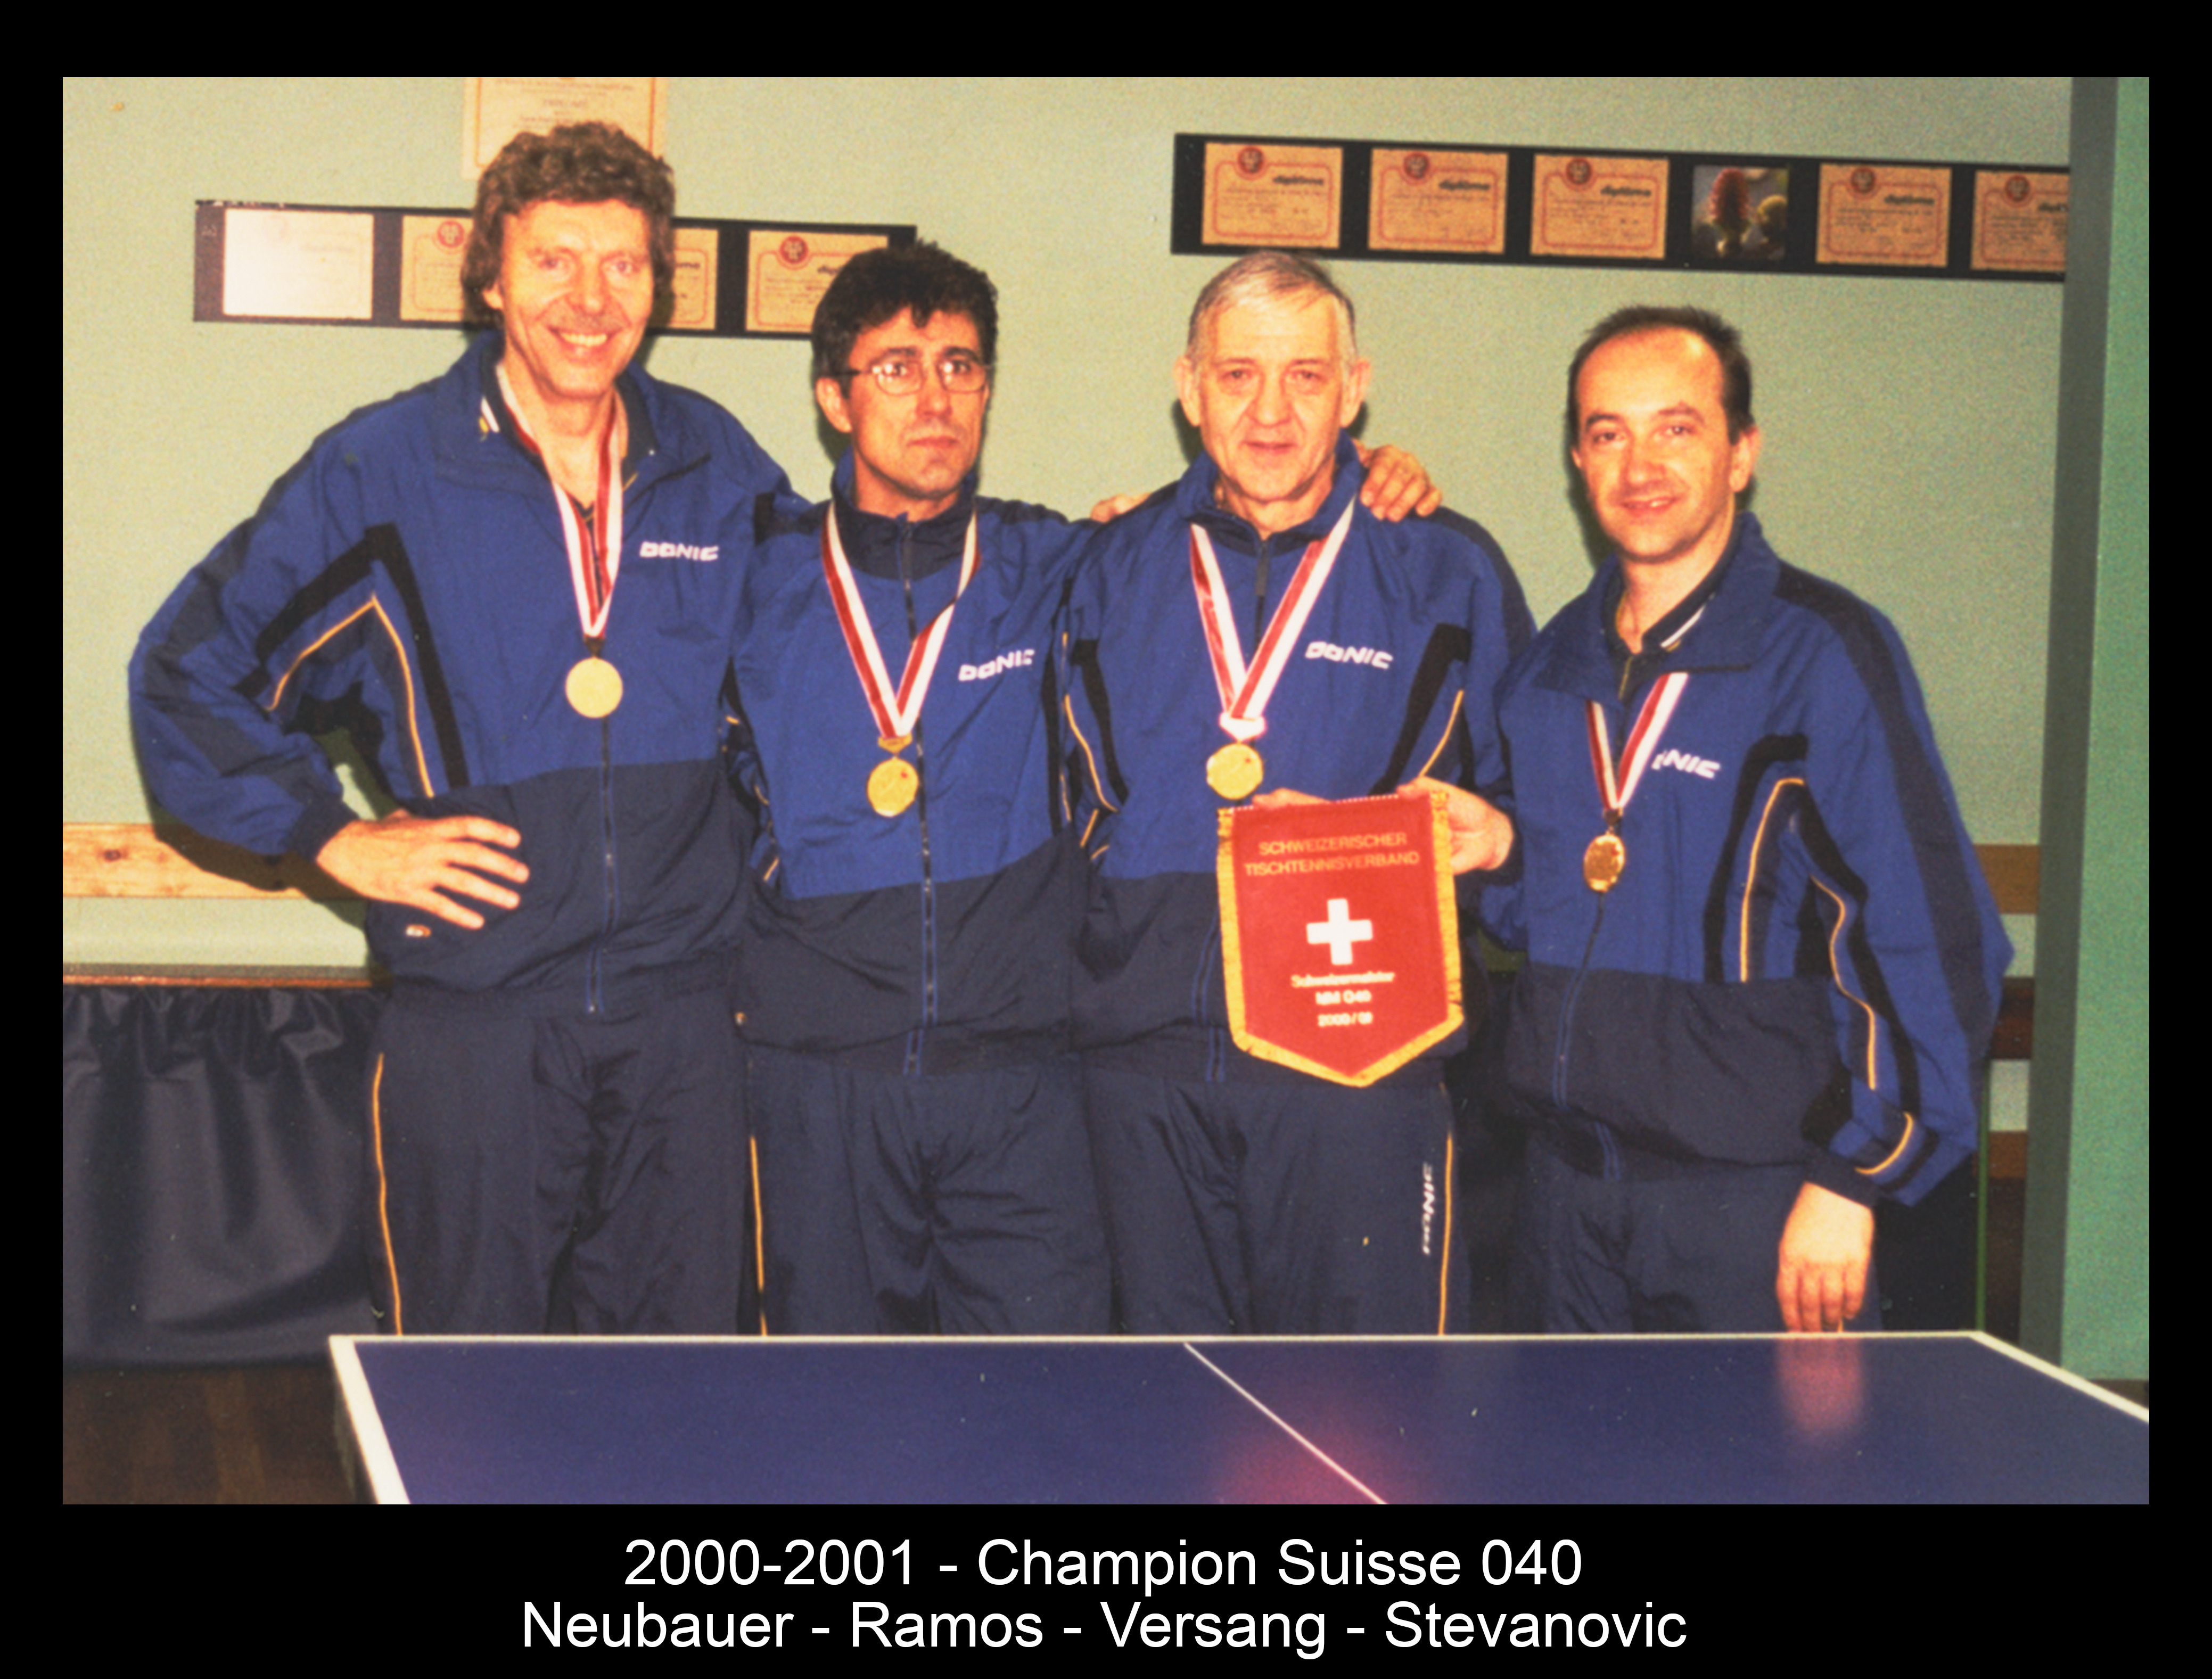 2000-2001 - Champion Suisse 040 - Neubauer - Ramos - Versang - Stevanovic